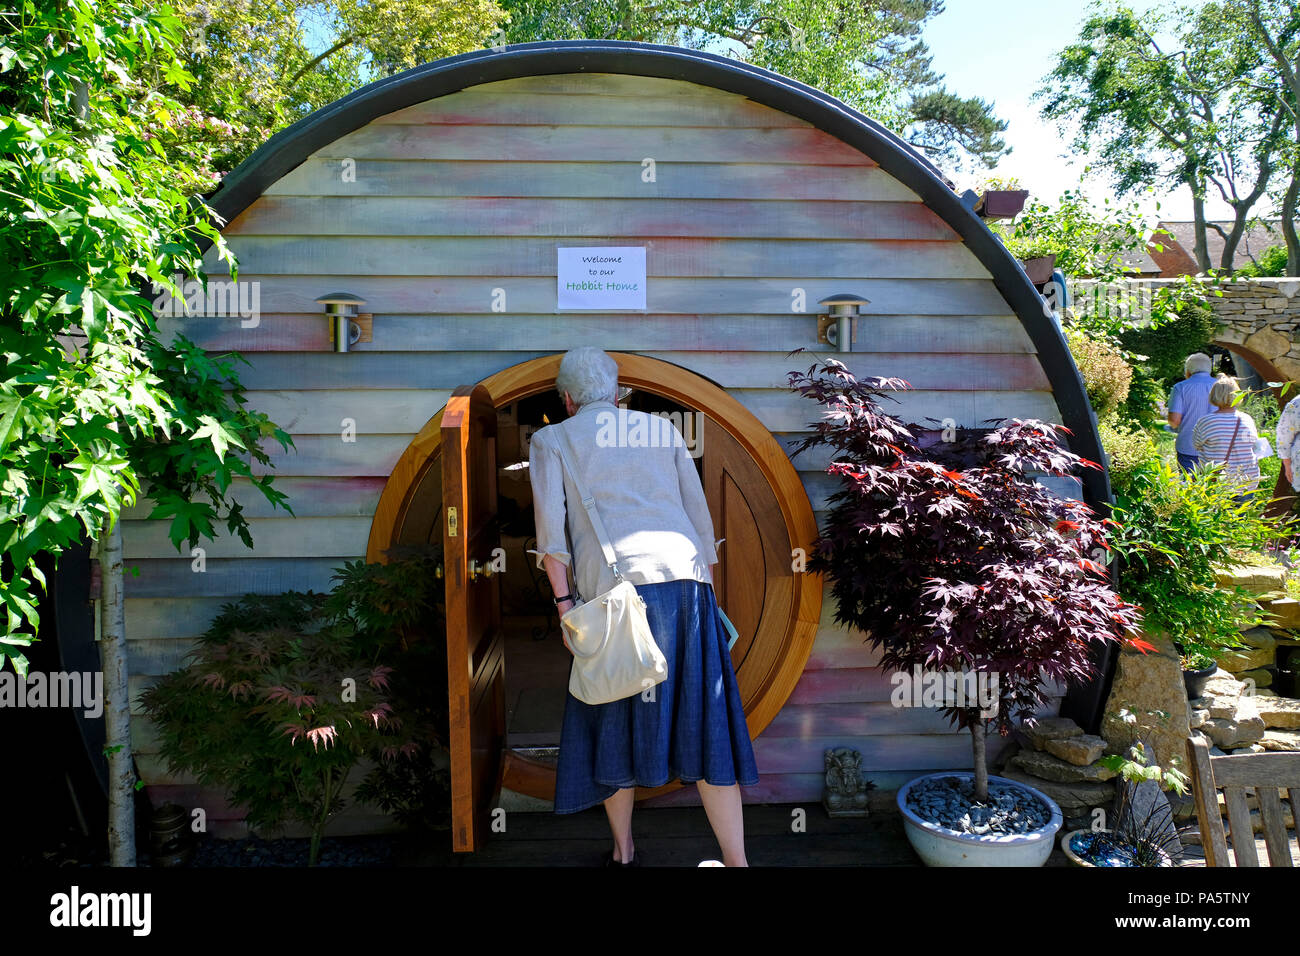 Lady peering into Hobbit House garden summerhouse Stock Photo